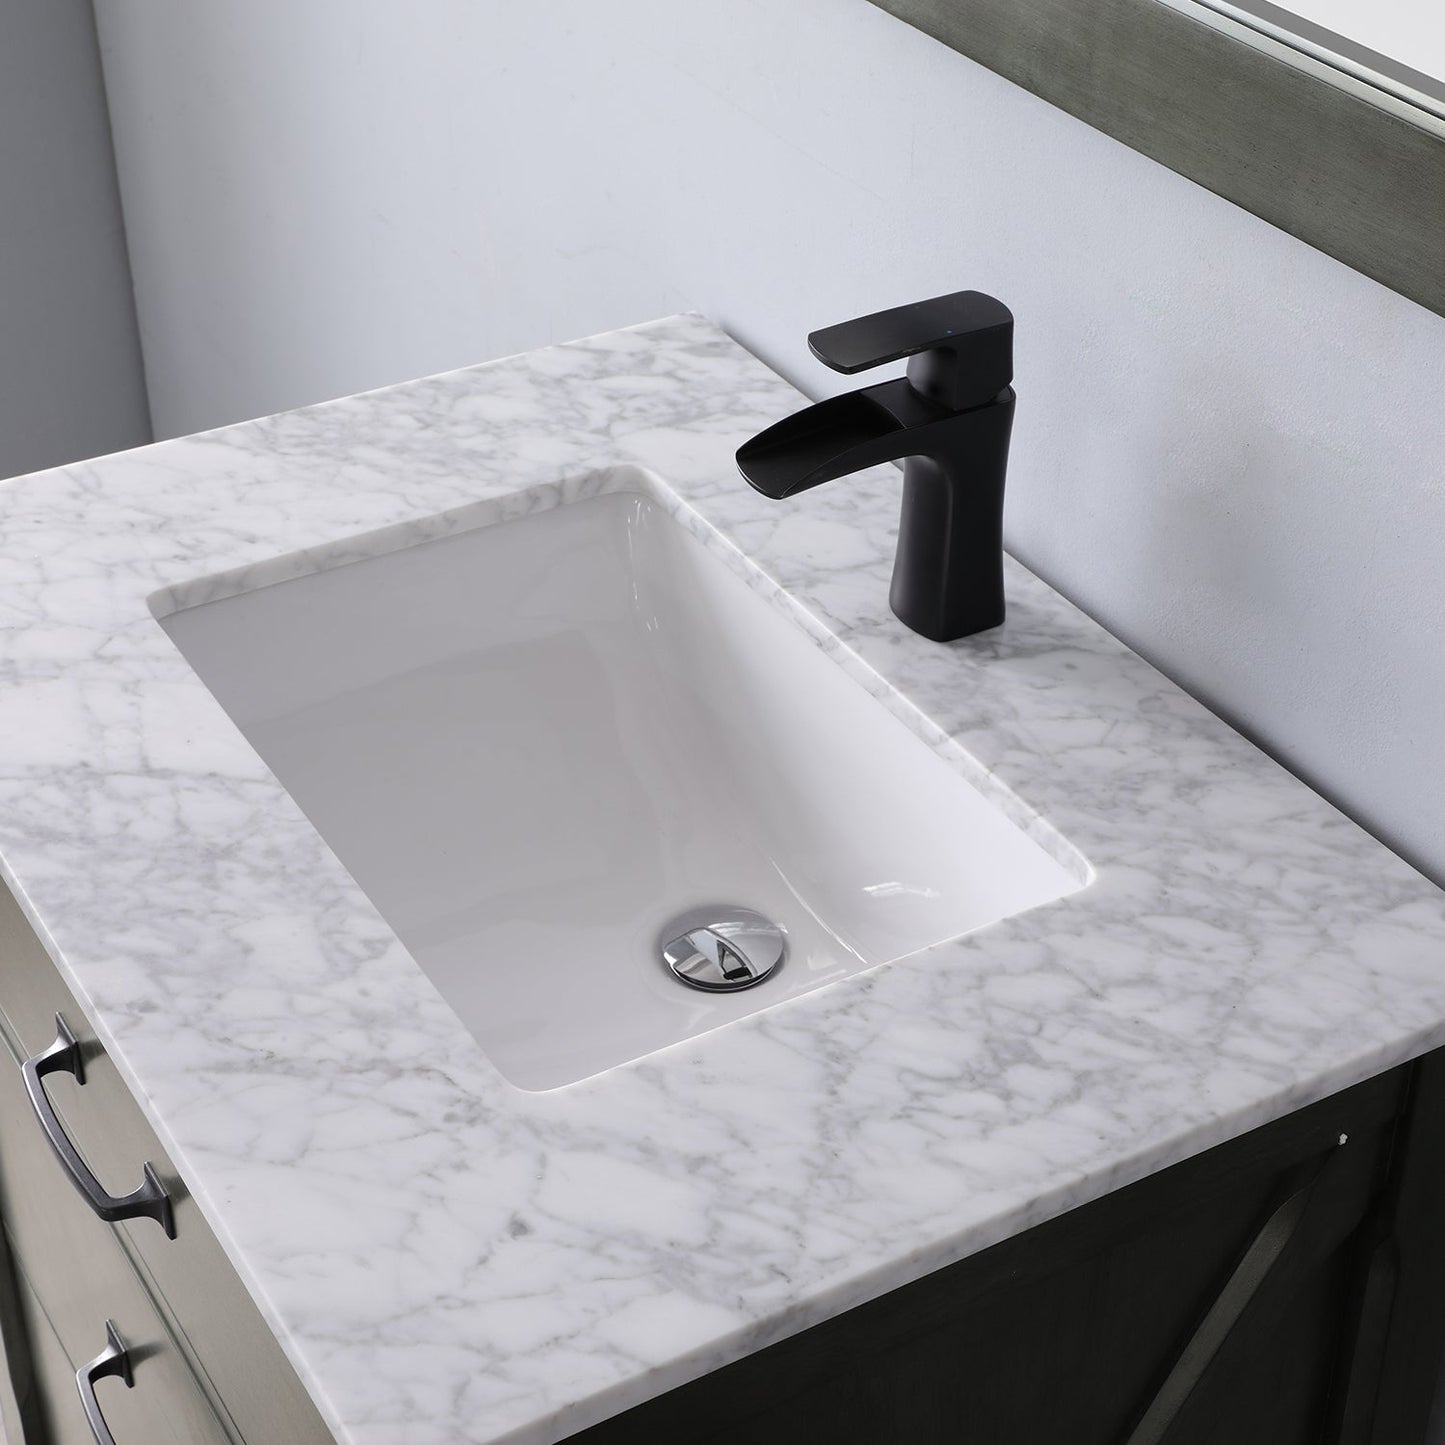 Maribella 30" Single Bathroom Vanity Set in Rust Black and Carrara White Marble Countertop without Mirror